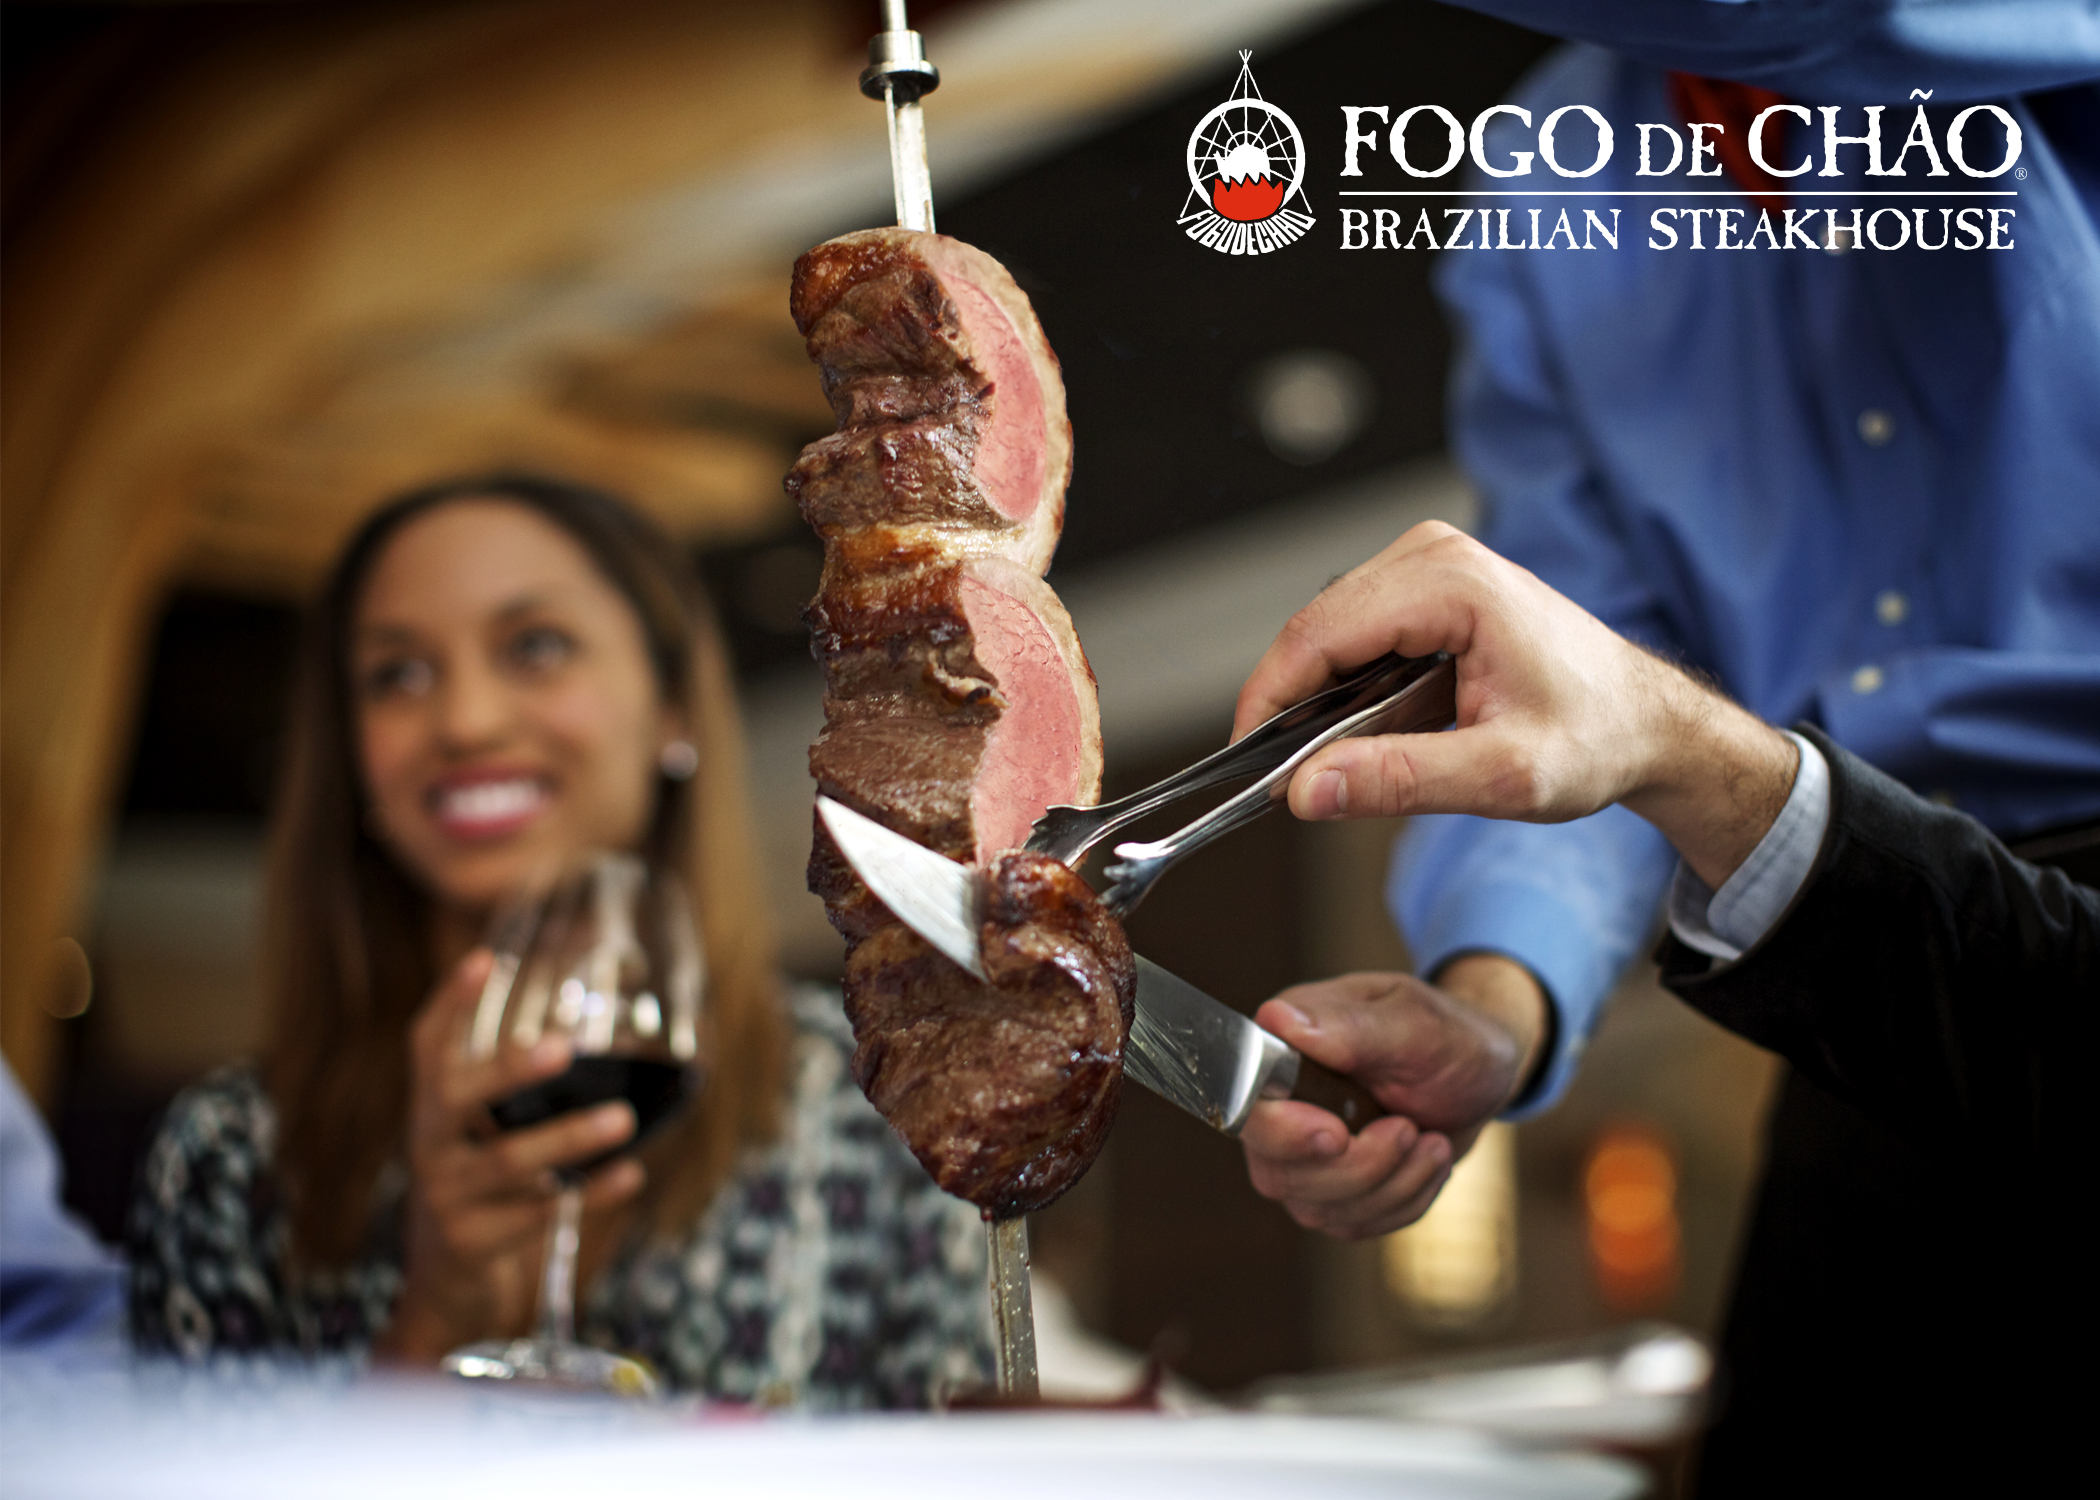 Fogo De Chao Brazilian Steakhouse